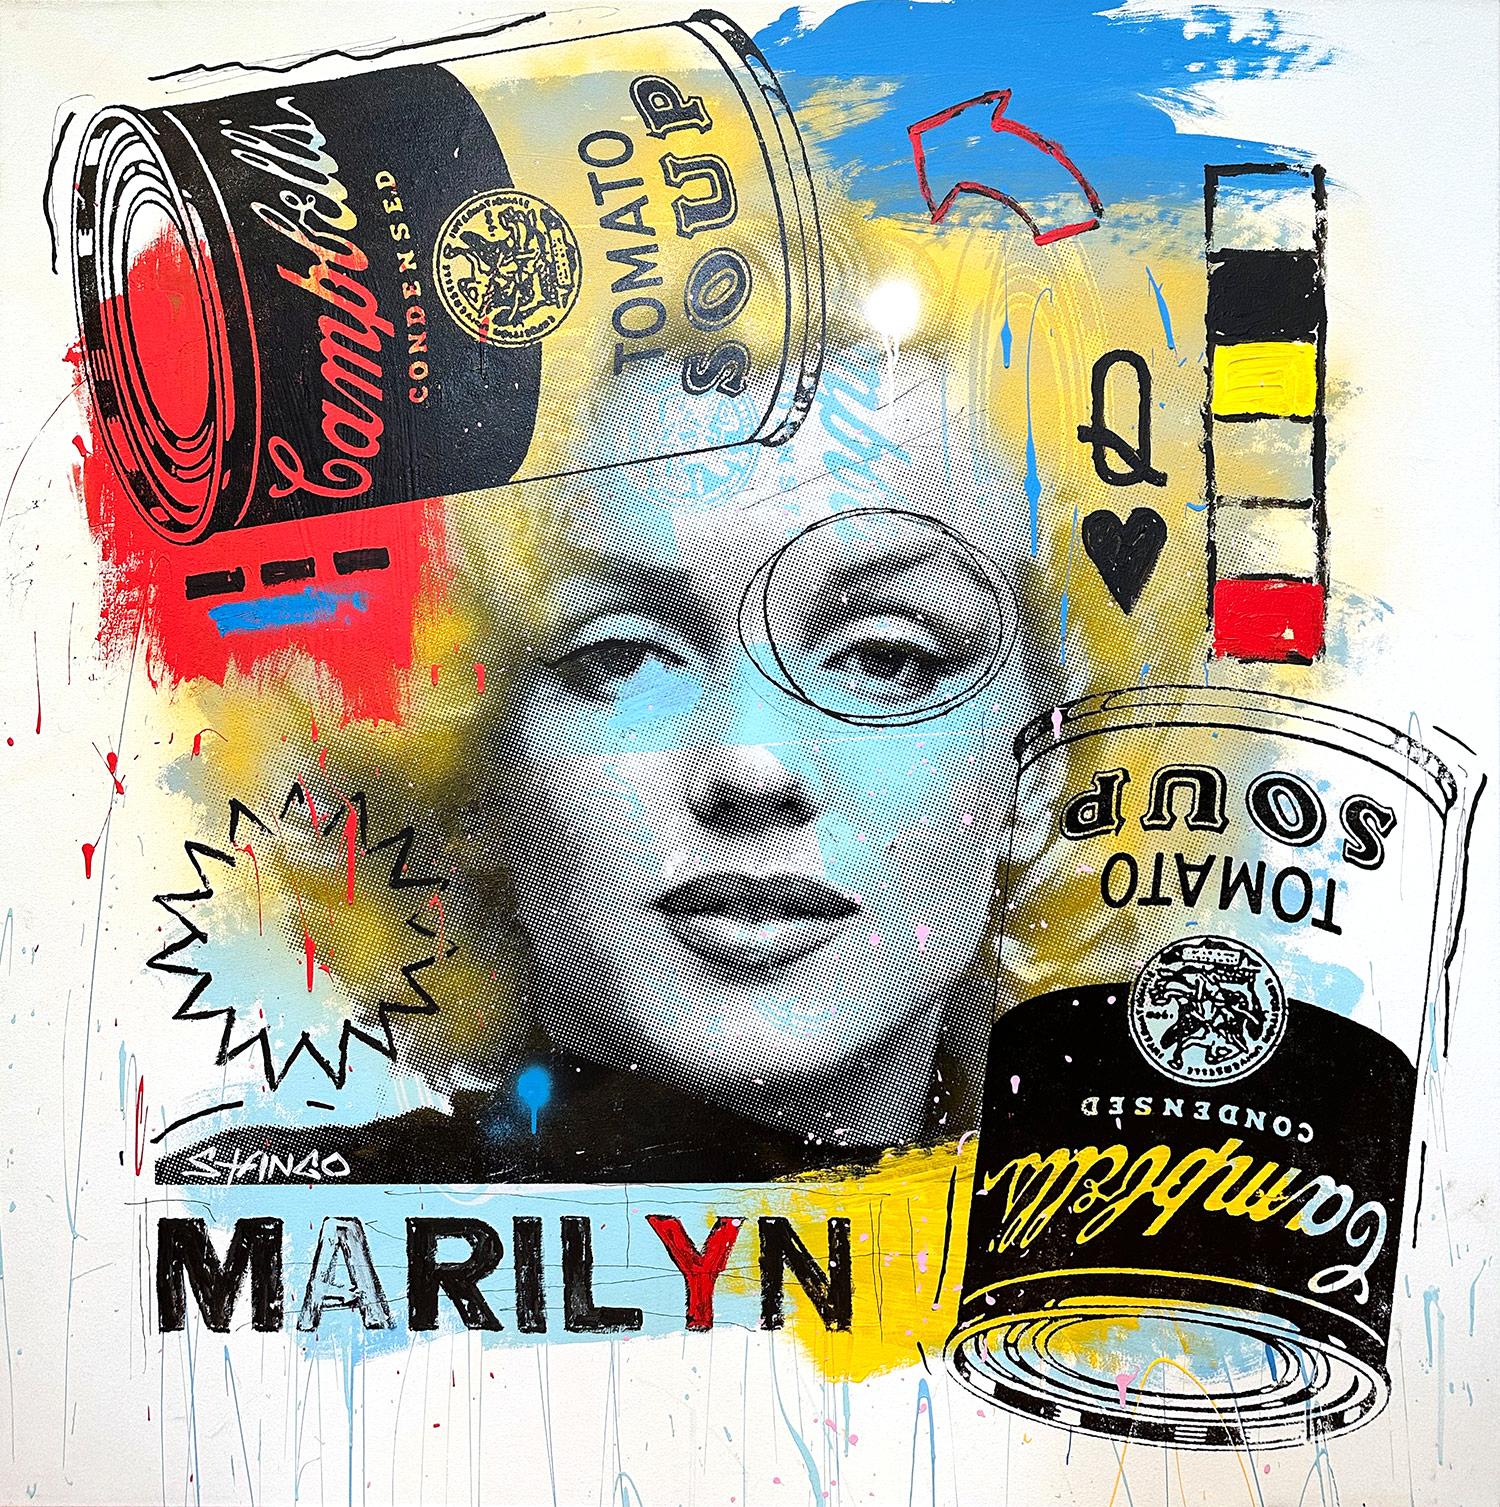 John Stango Portrait Painting - "Factory Girl" Marilyn Monroe & Campbells Soup Pop Art Acrylic Painting Canvas